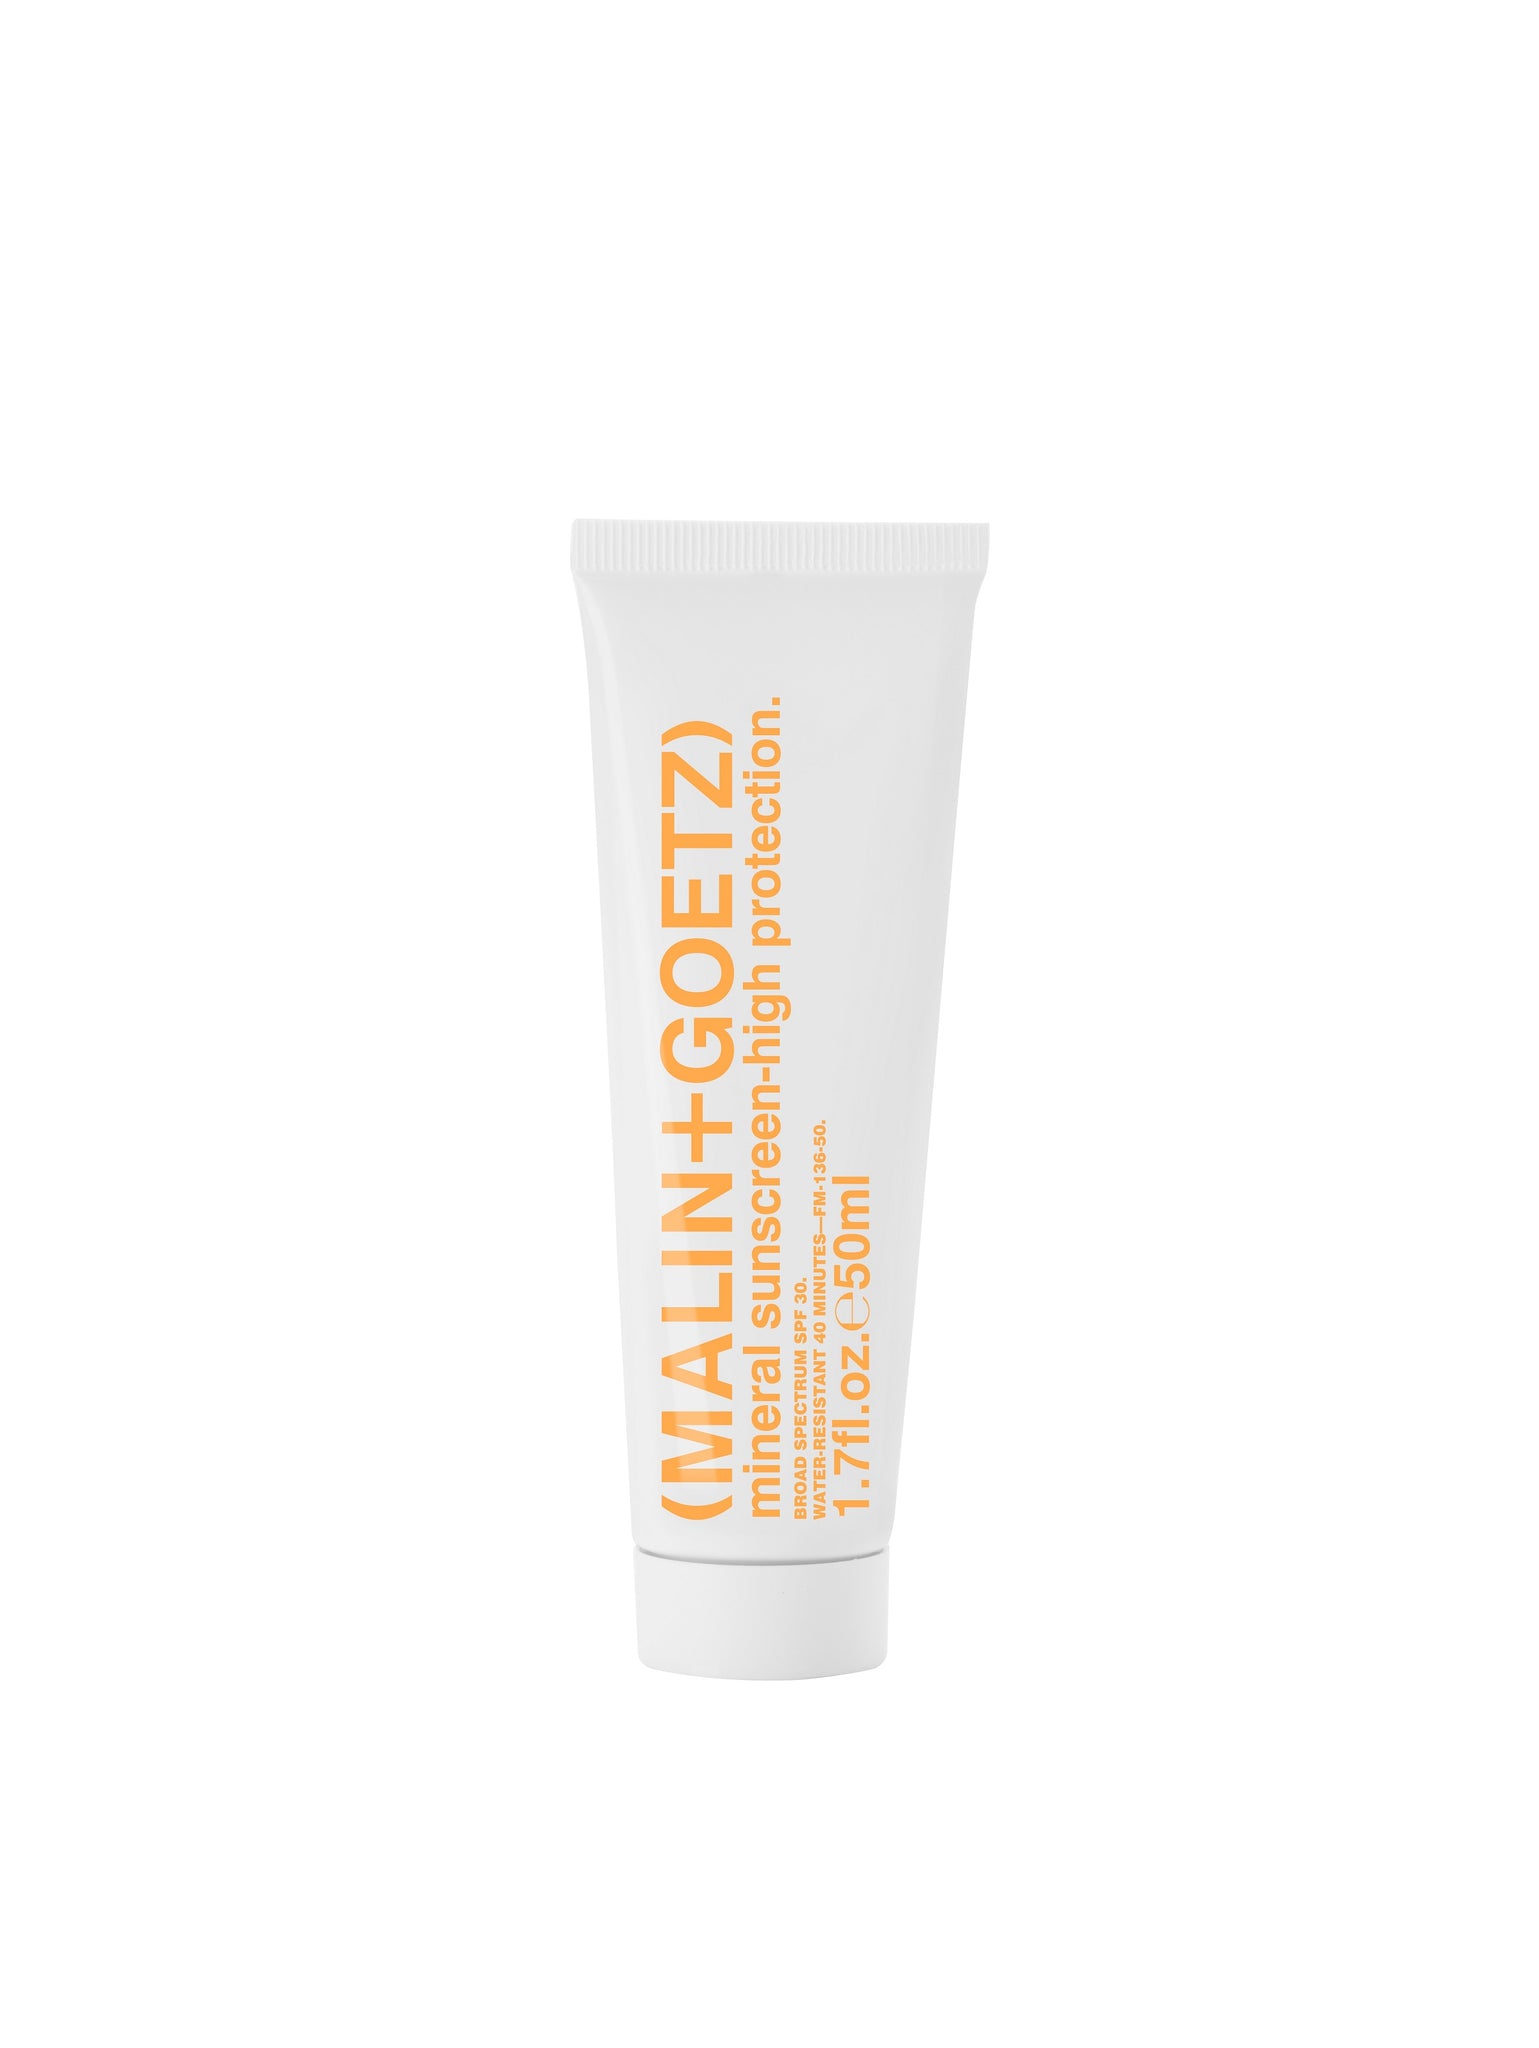 Malin + Goetz SPF 30 Sunscreen - High Protection